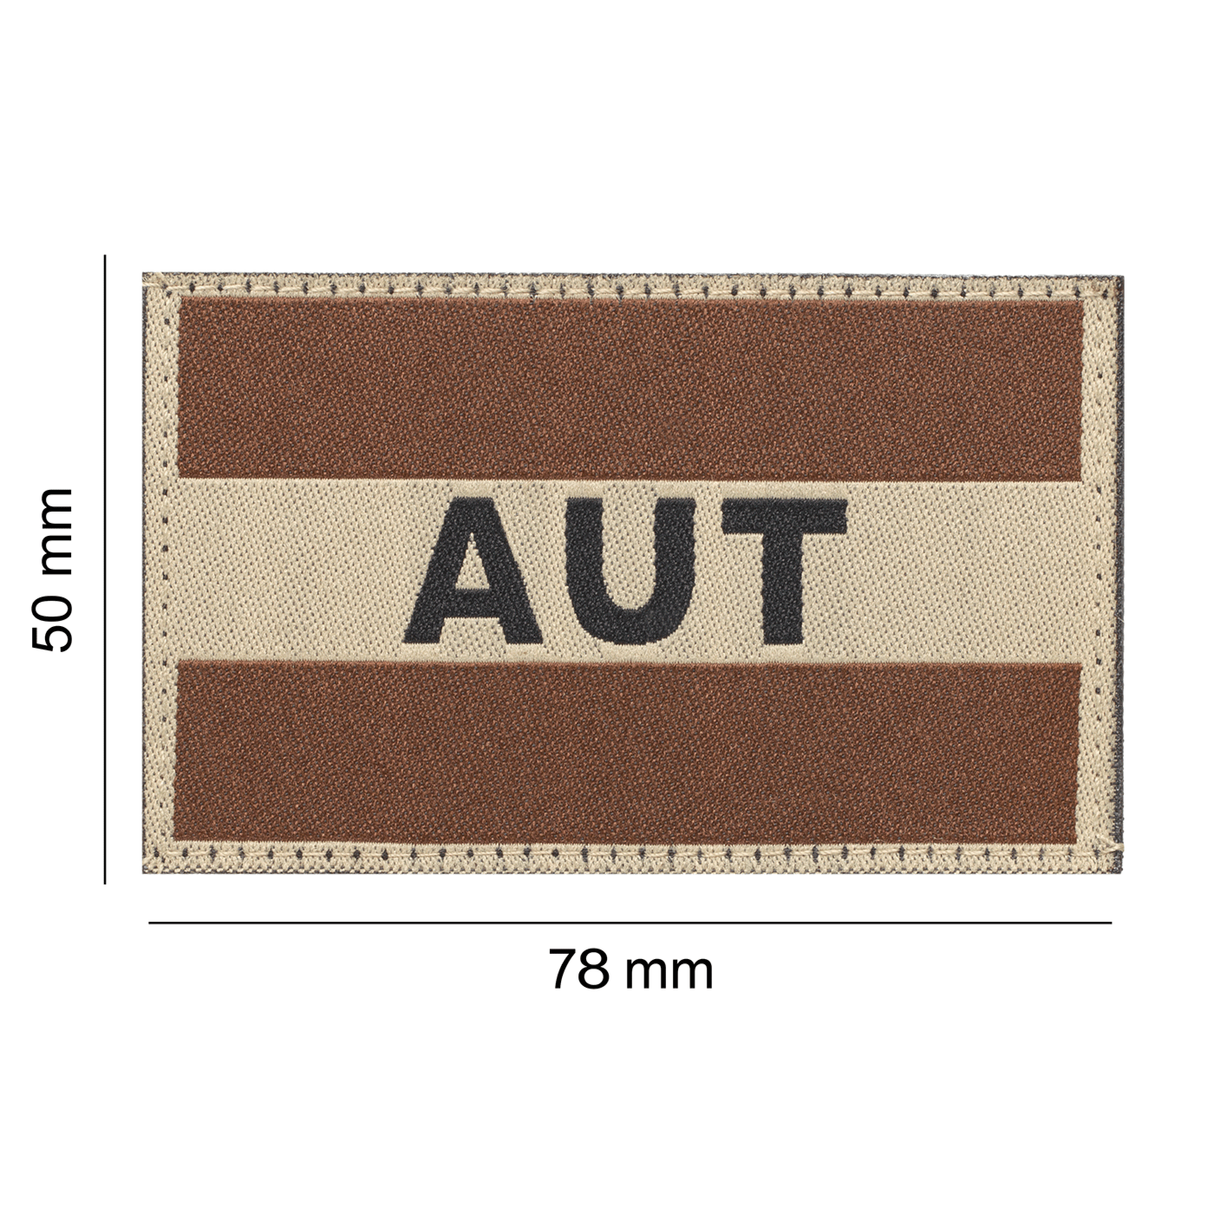 Clawgear Austria flag textile patch 